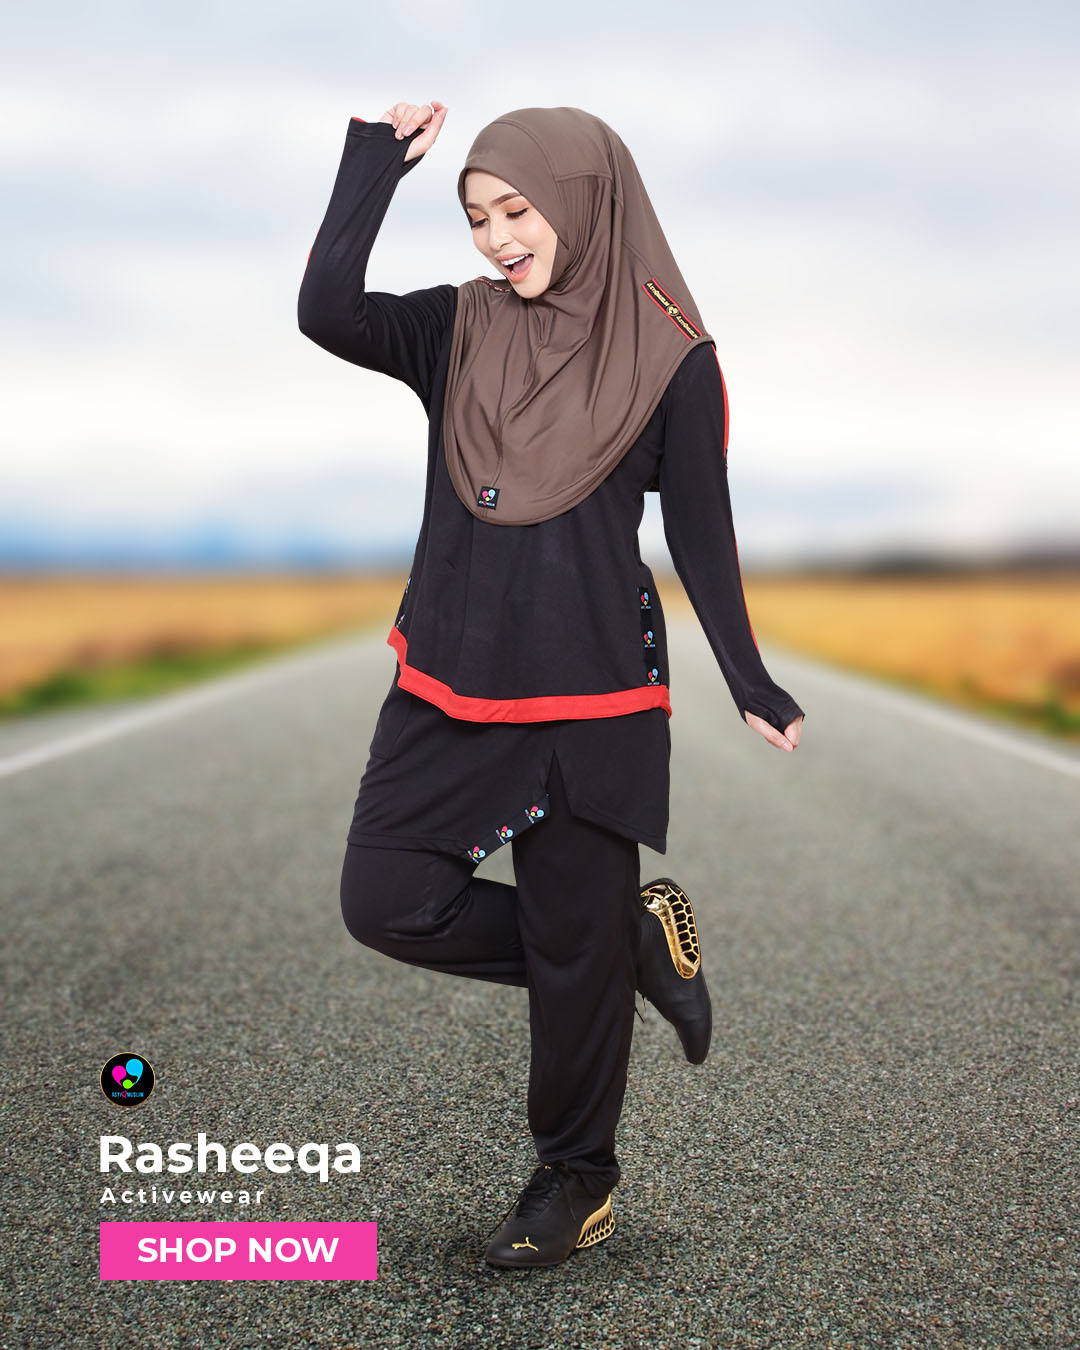 Paparan produk homepage website Rasheeqa